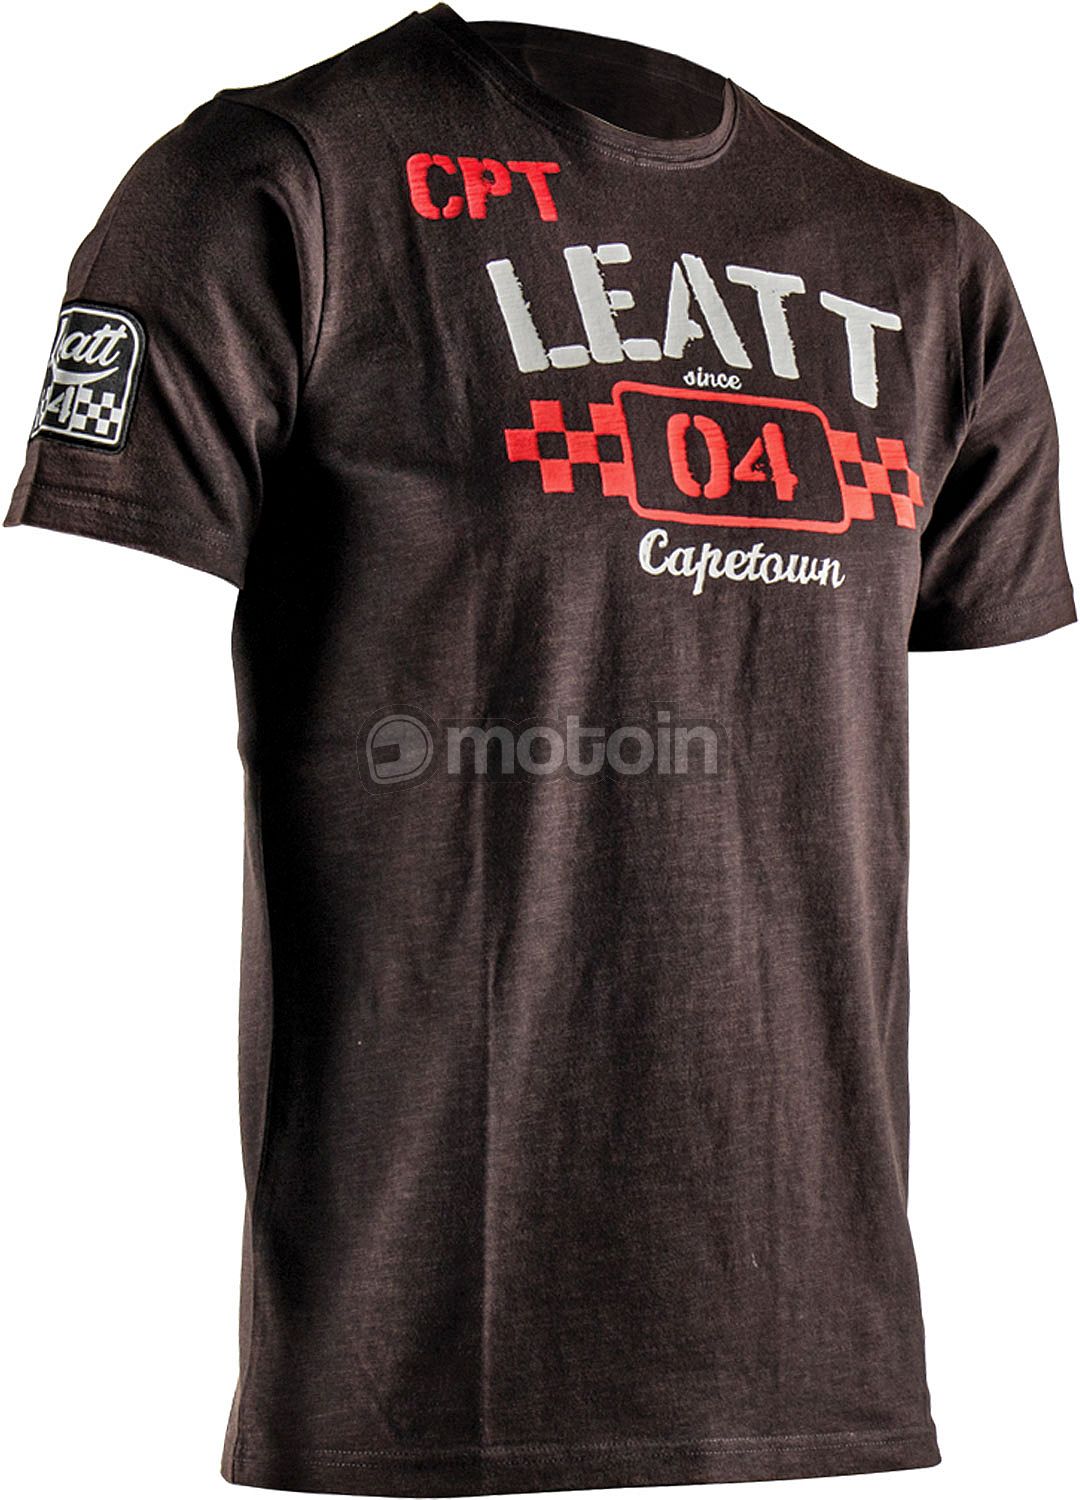 Leatt Heritage S22, t-shirt